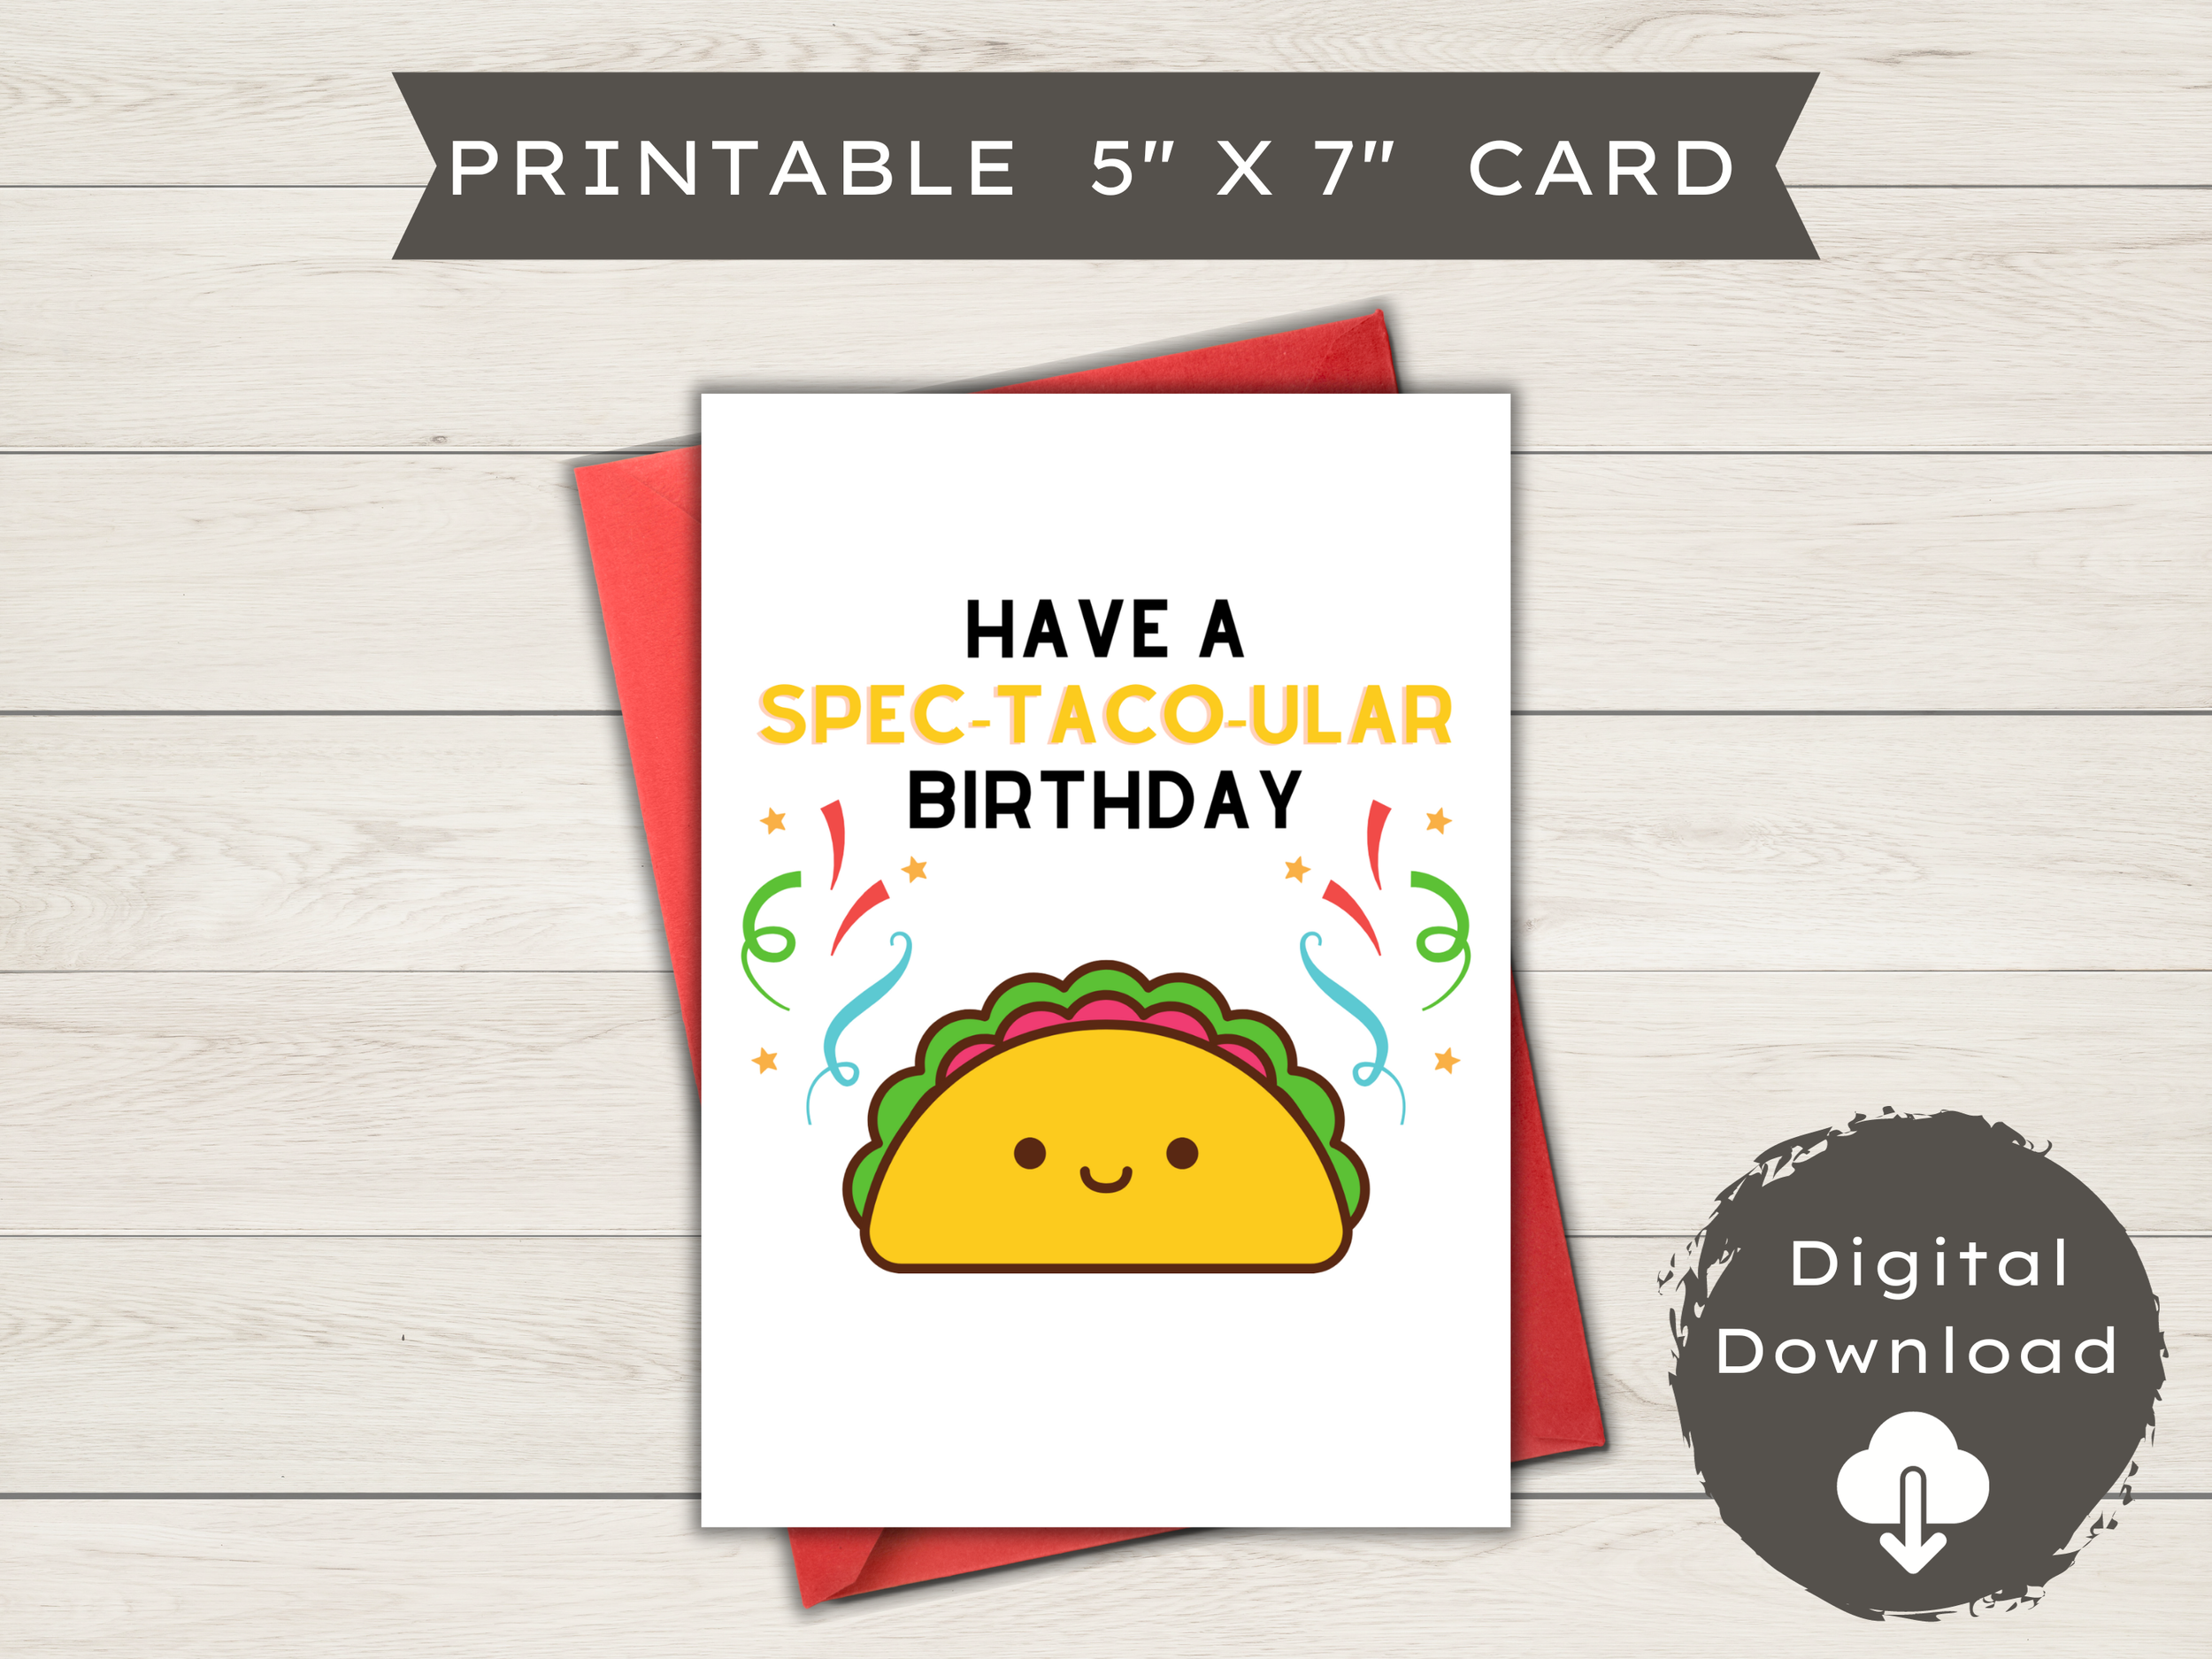 Printable Birthday Card - Spec-taco-ular Day